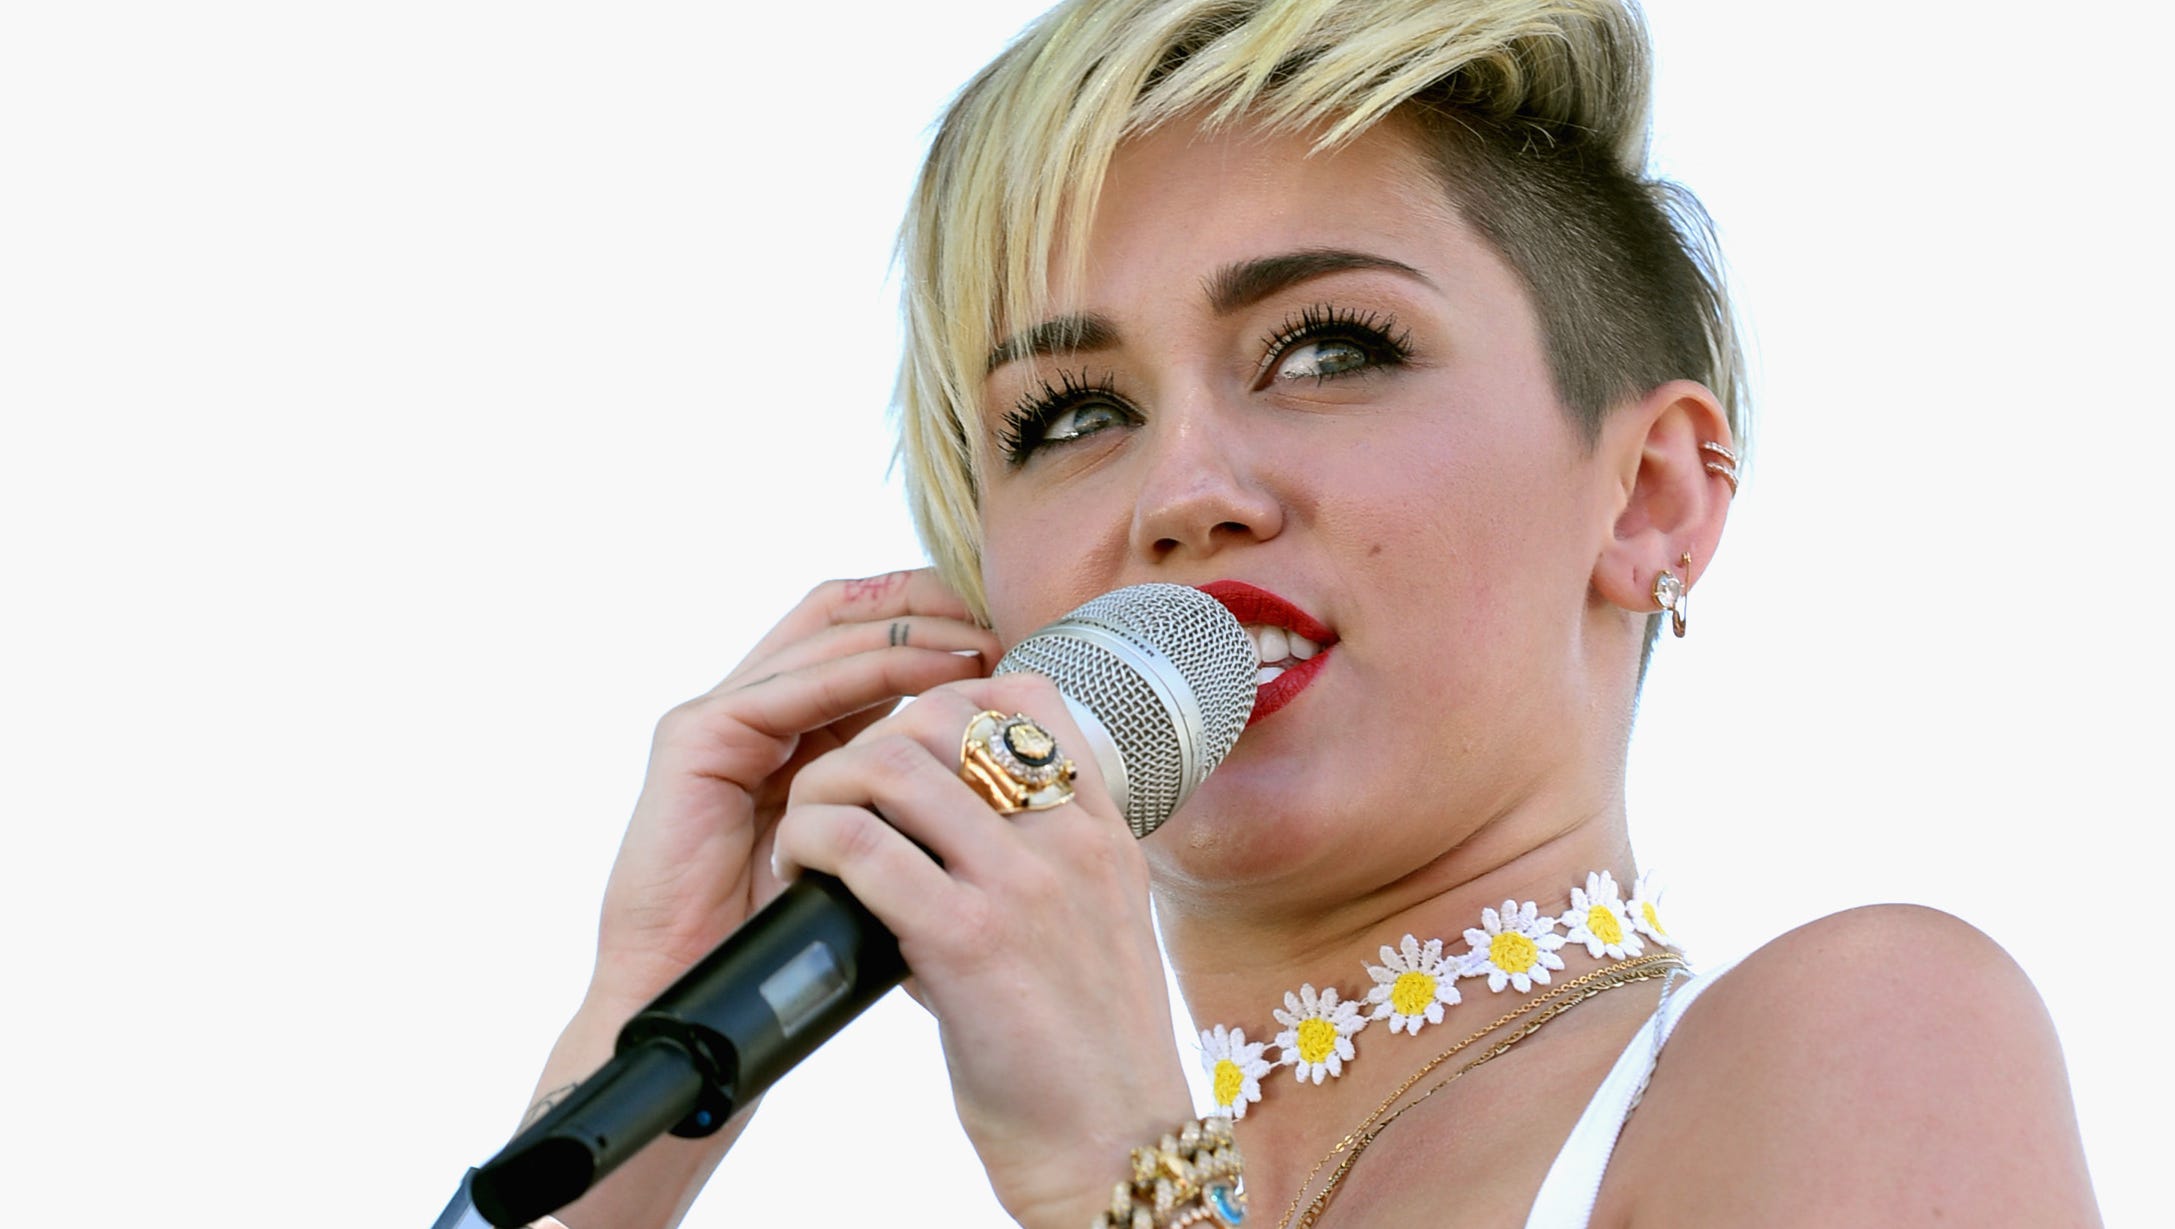 Miley mania! More semi-nude, sexual photos emerge